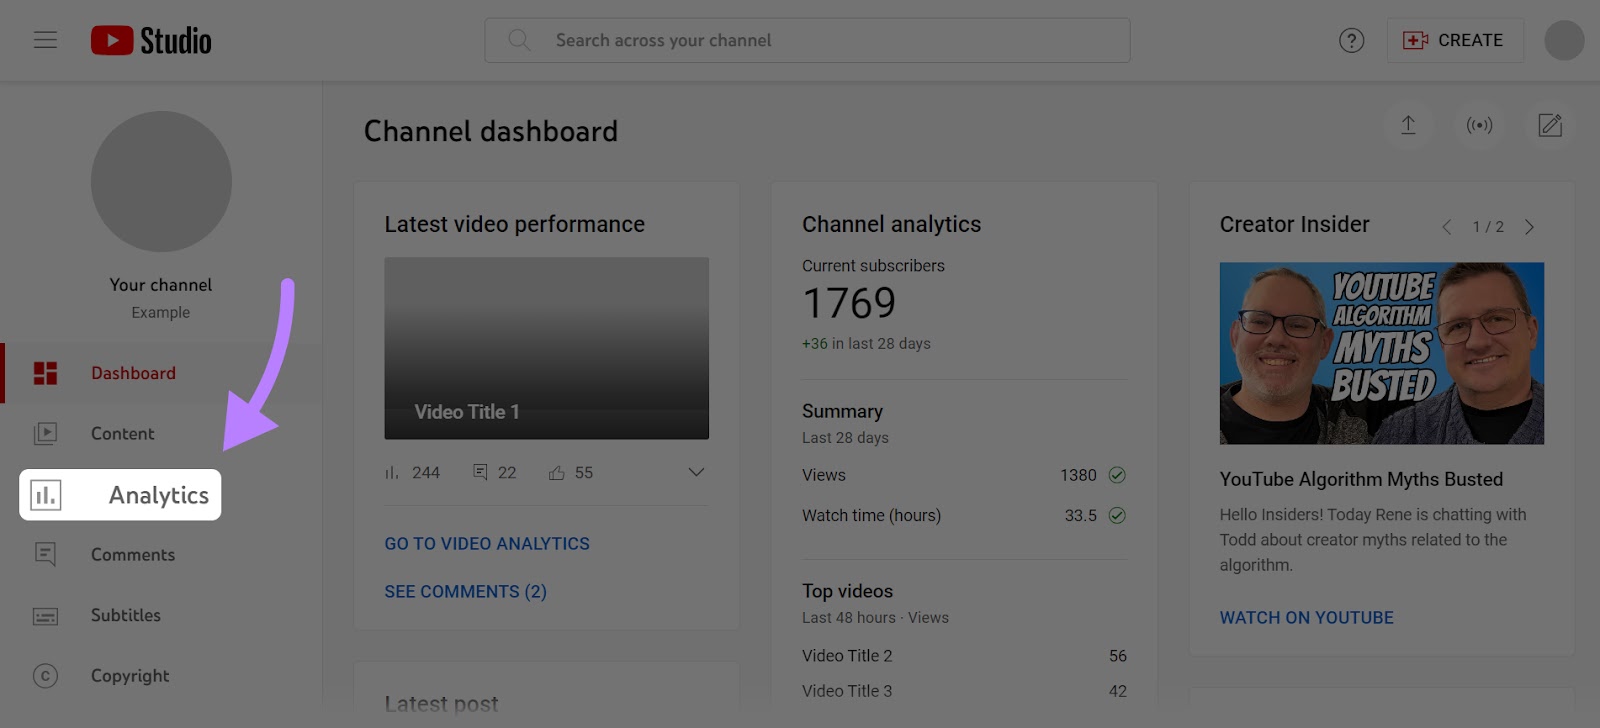 "Analytics" highlighted successful  the YouTube Studio menu